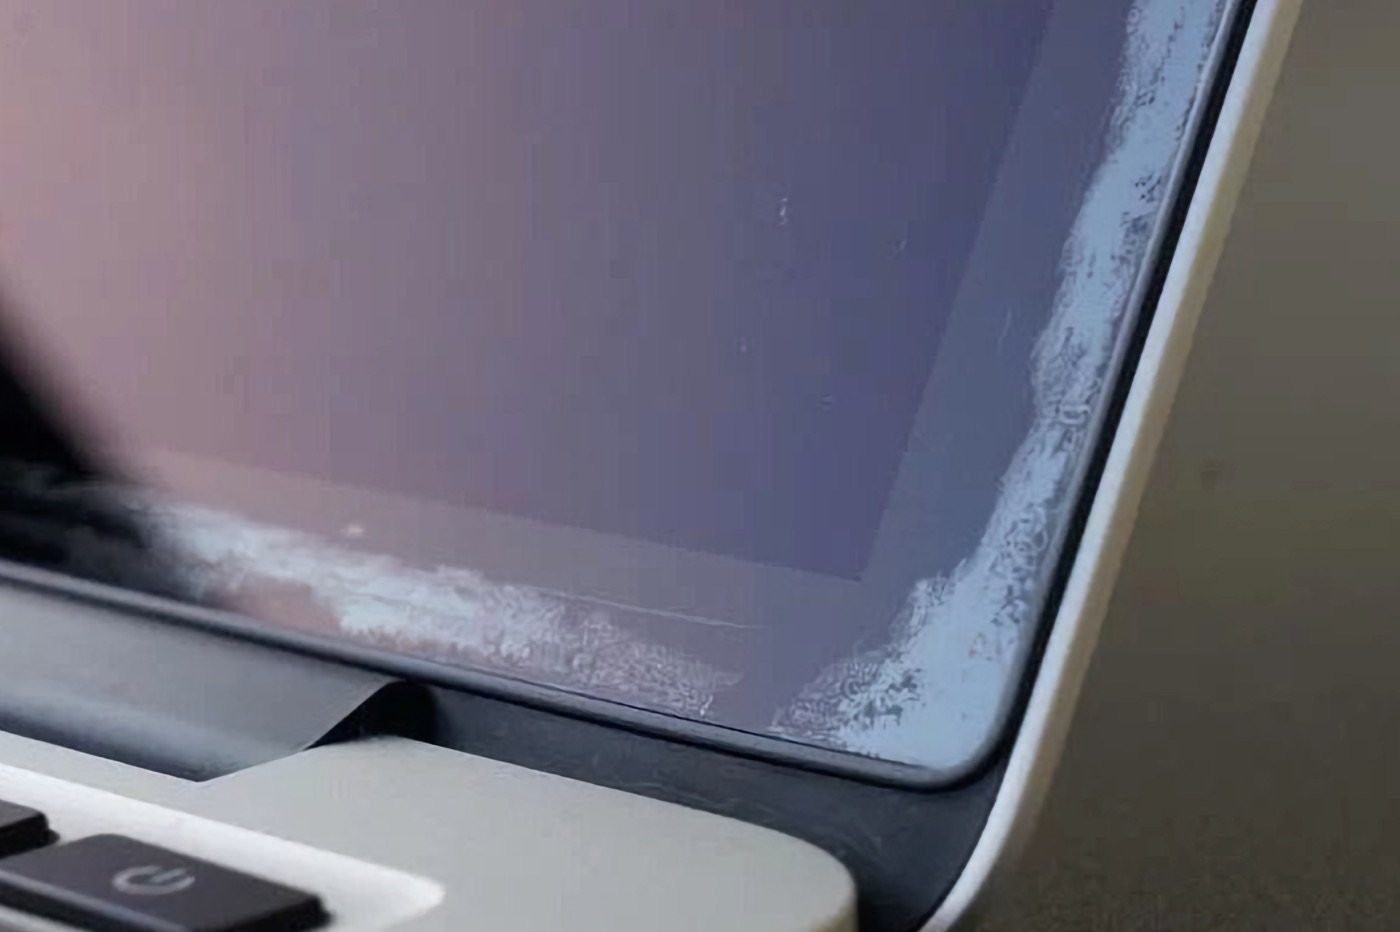 Apple MacBook Staingate repair program